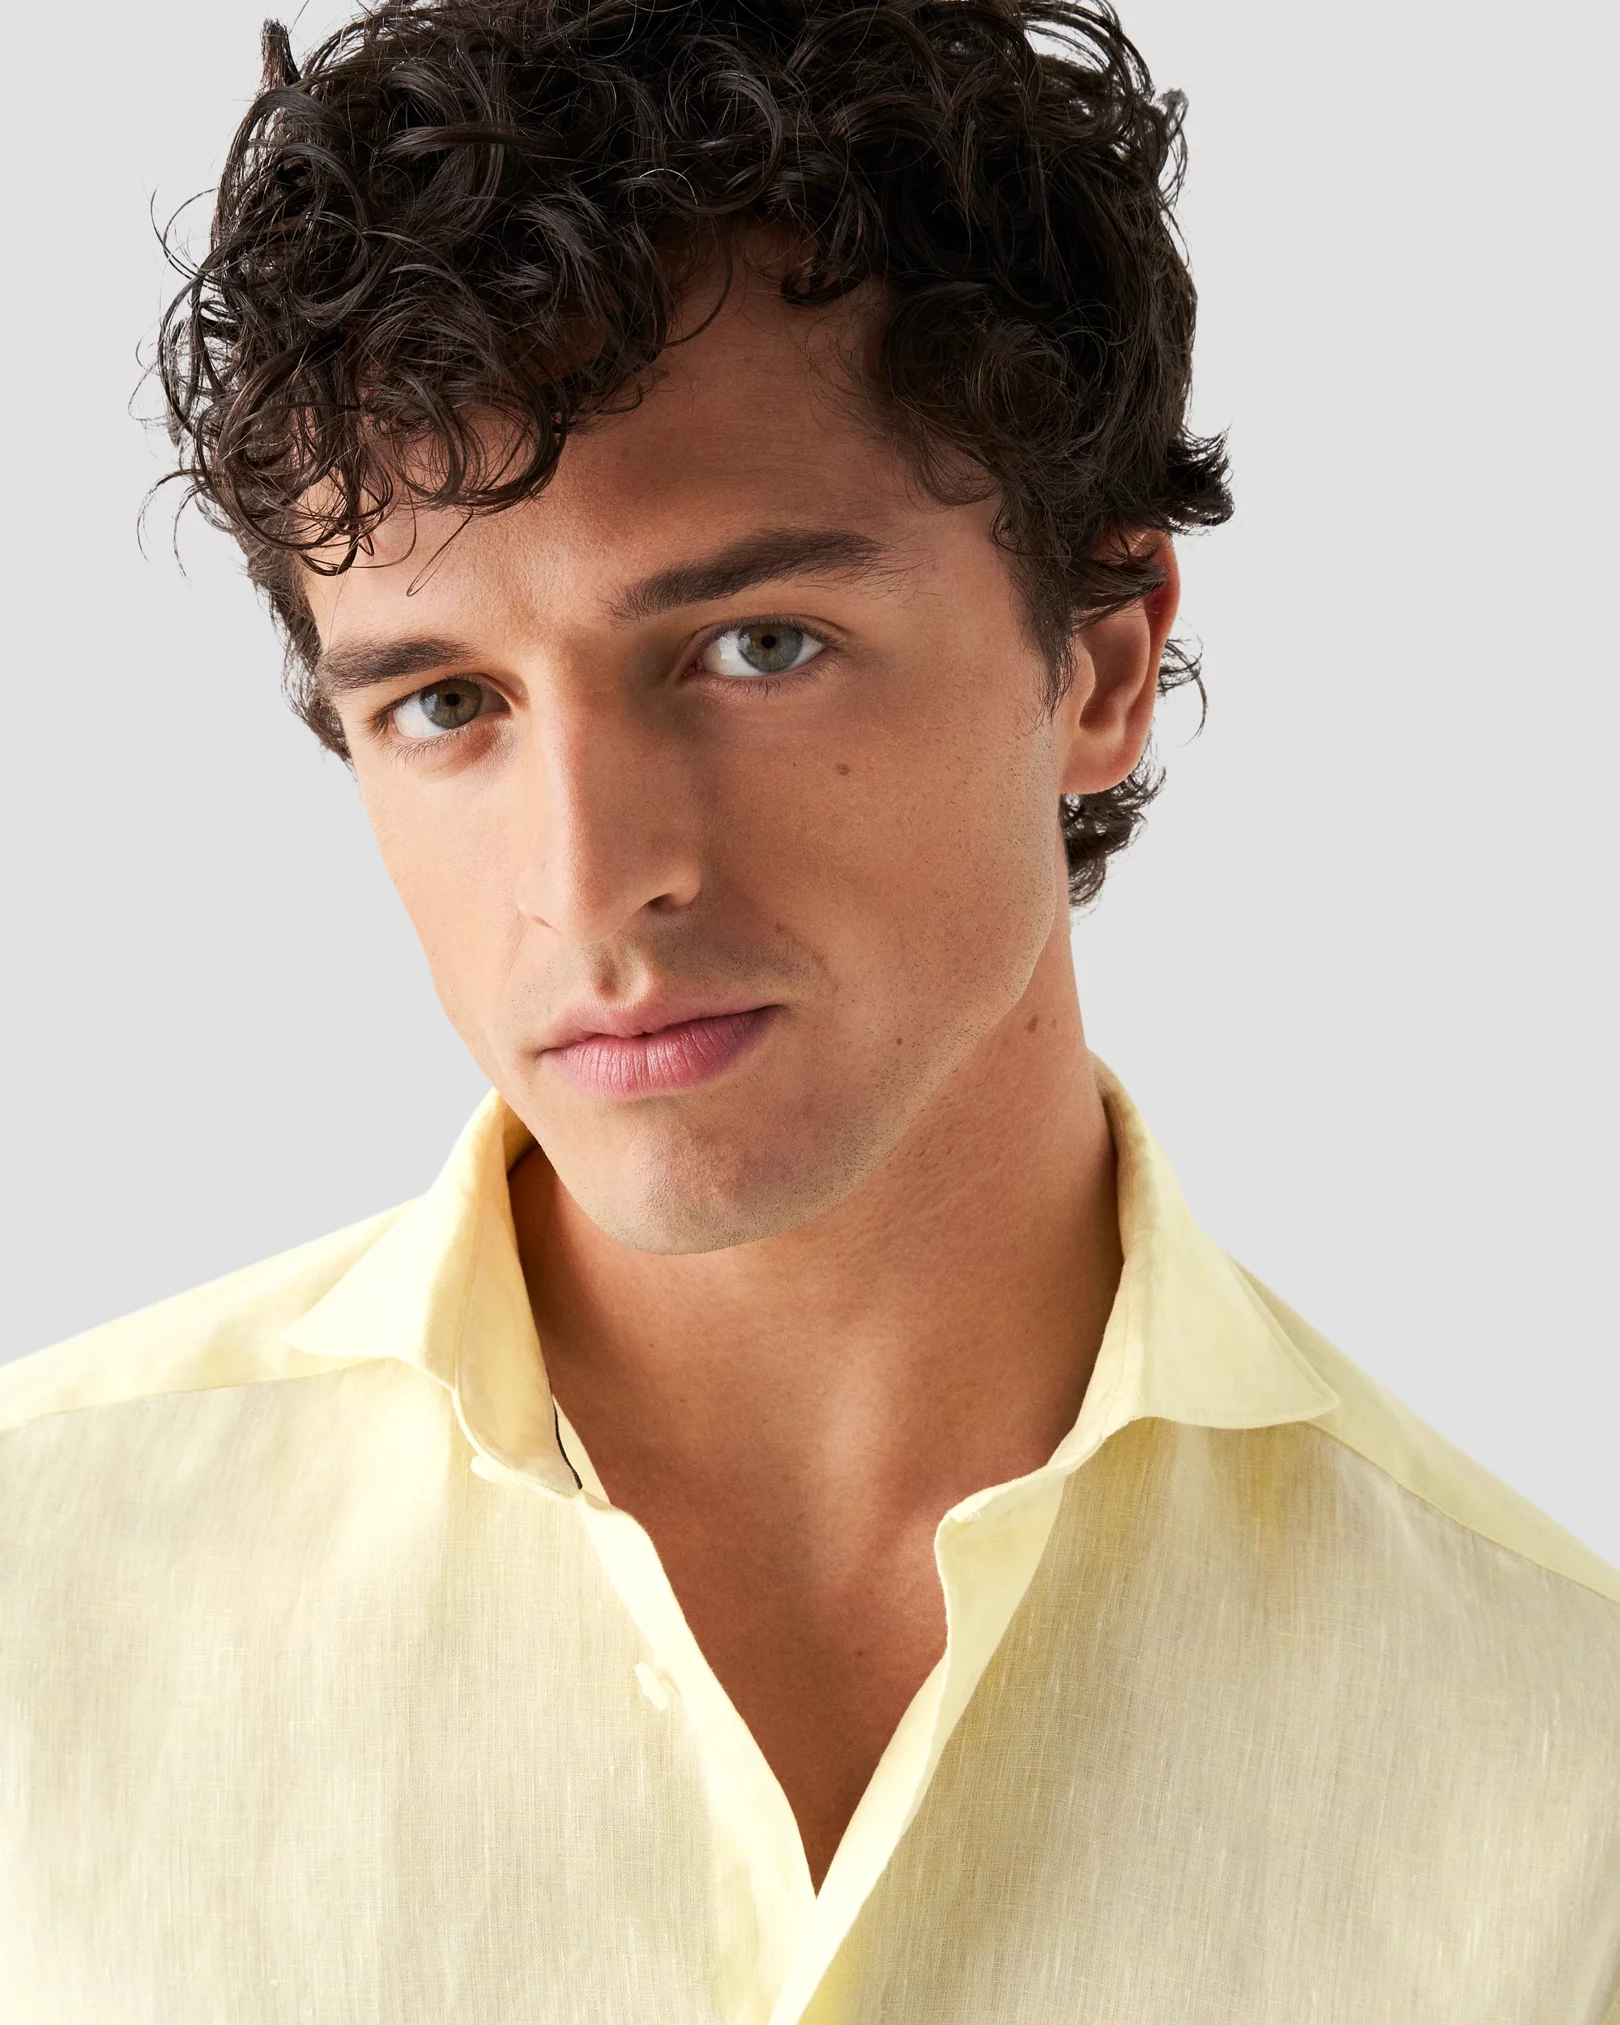 Yellow Solid Plain Weave Linen Shirt - Eton